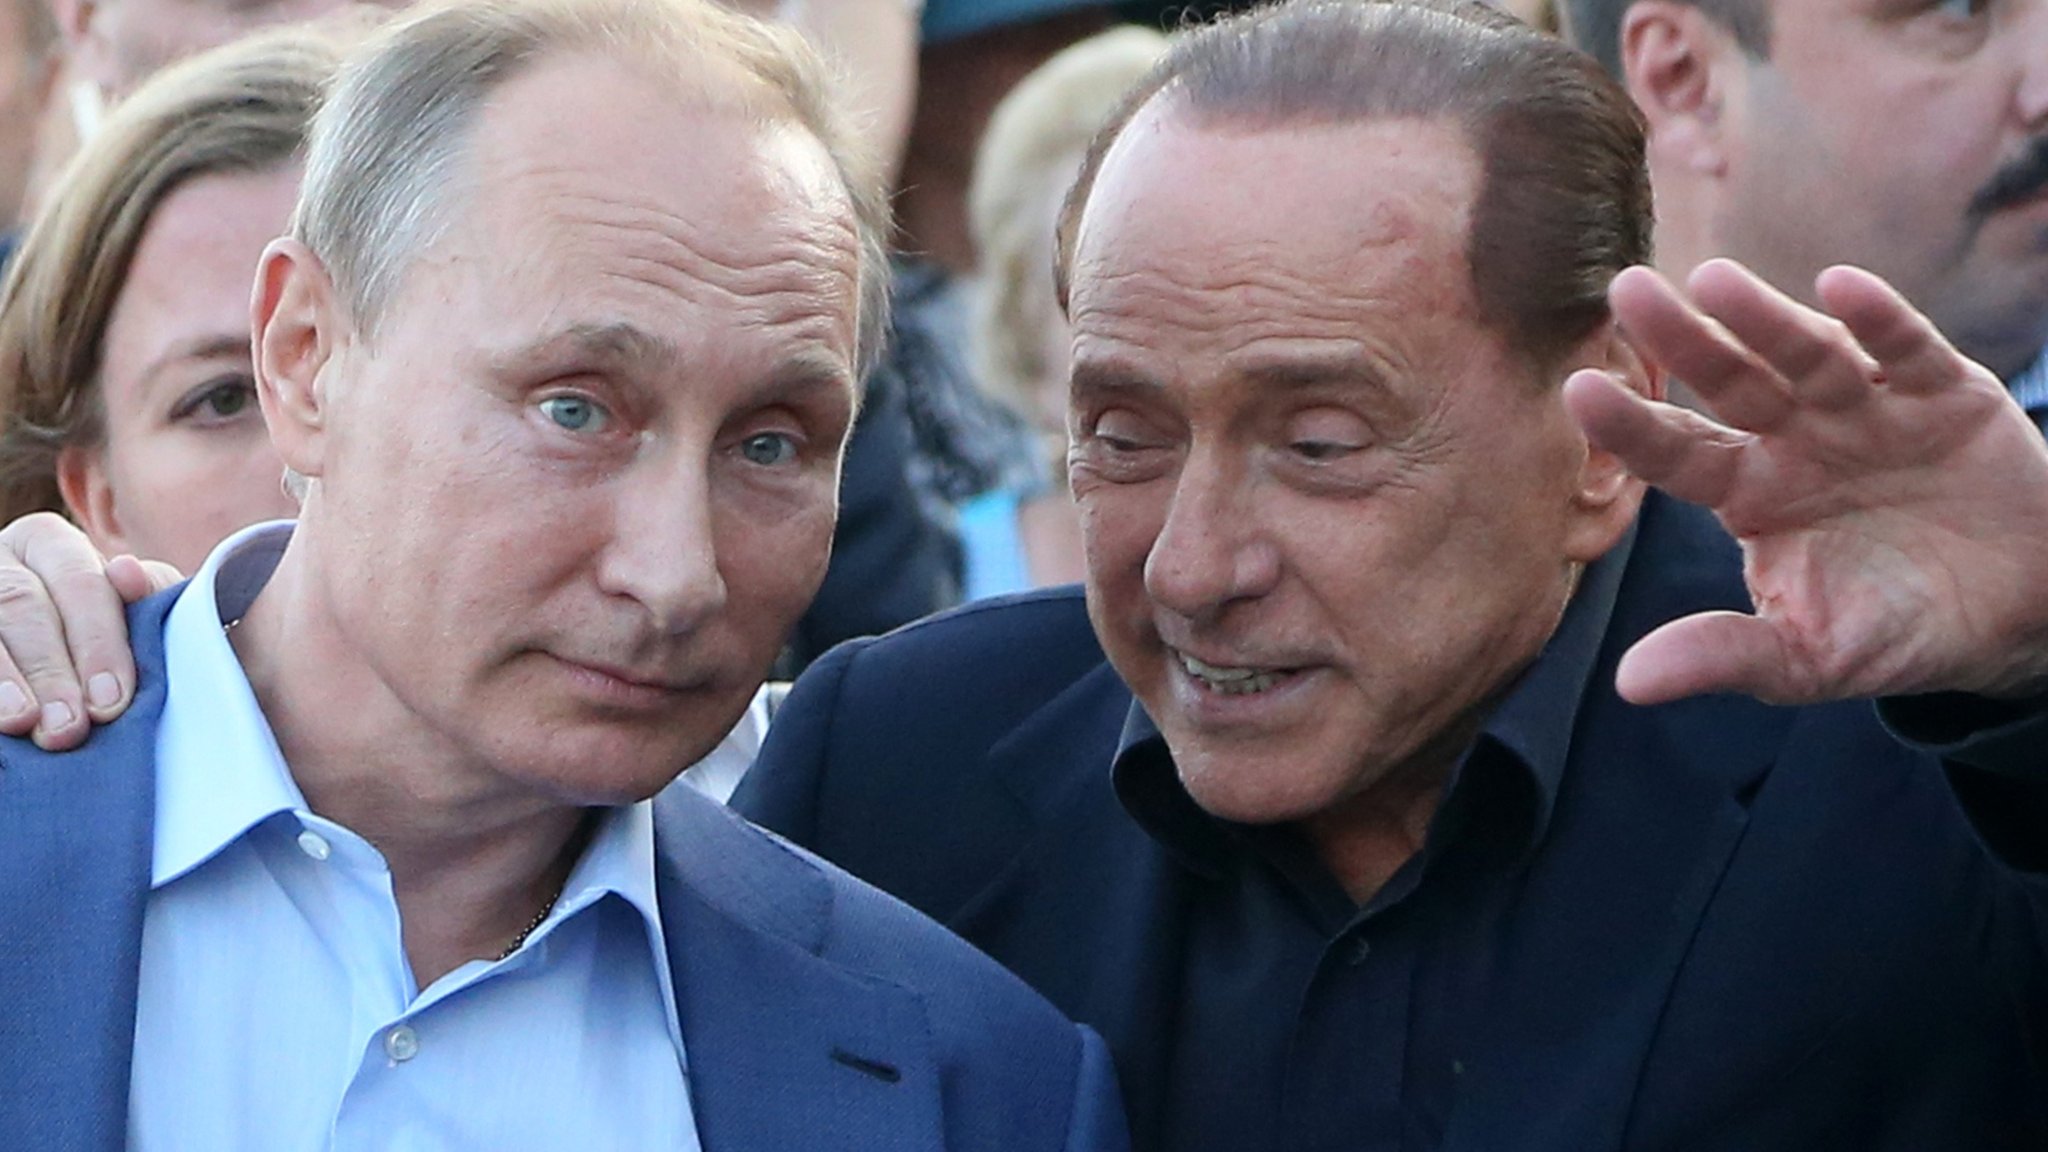 Getty ImagesSilvio Berlusconi boasts of closeness image